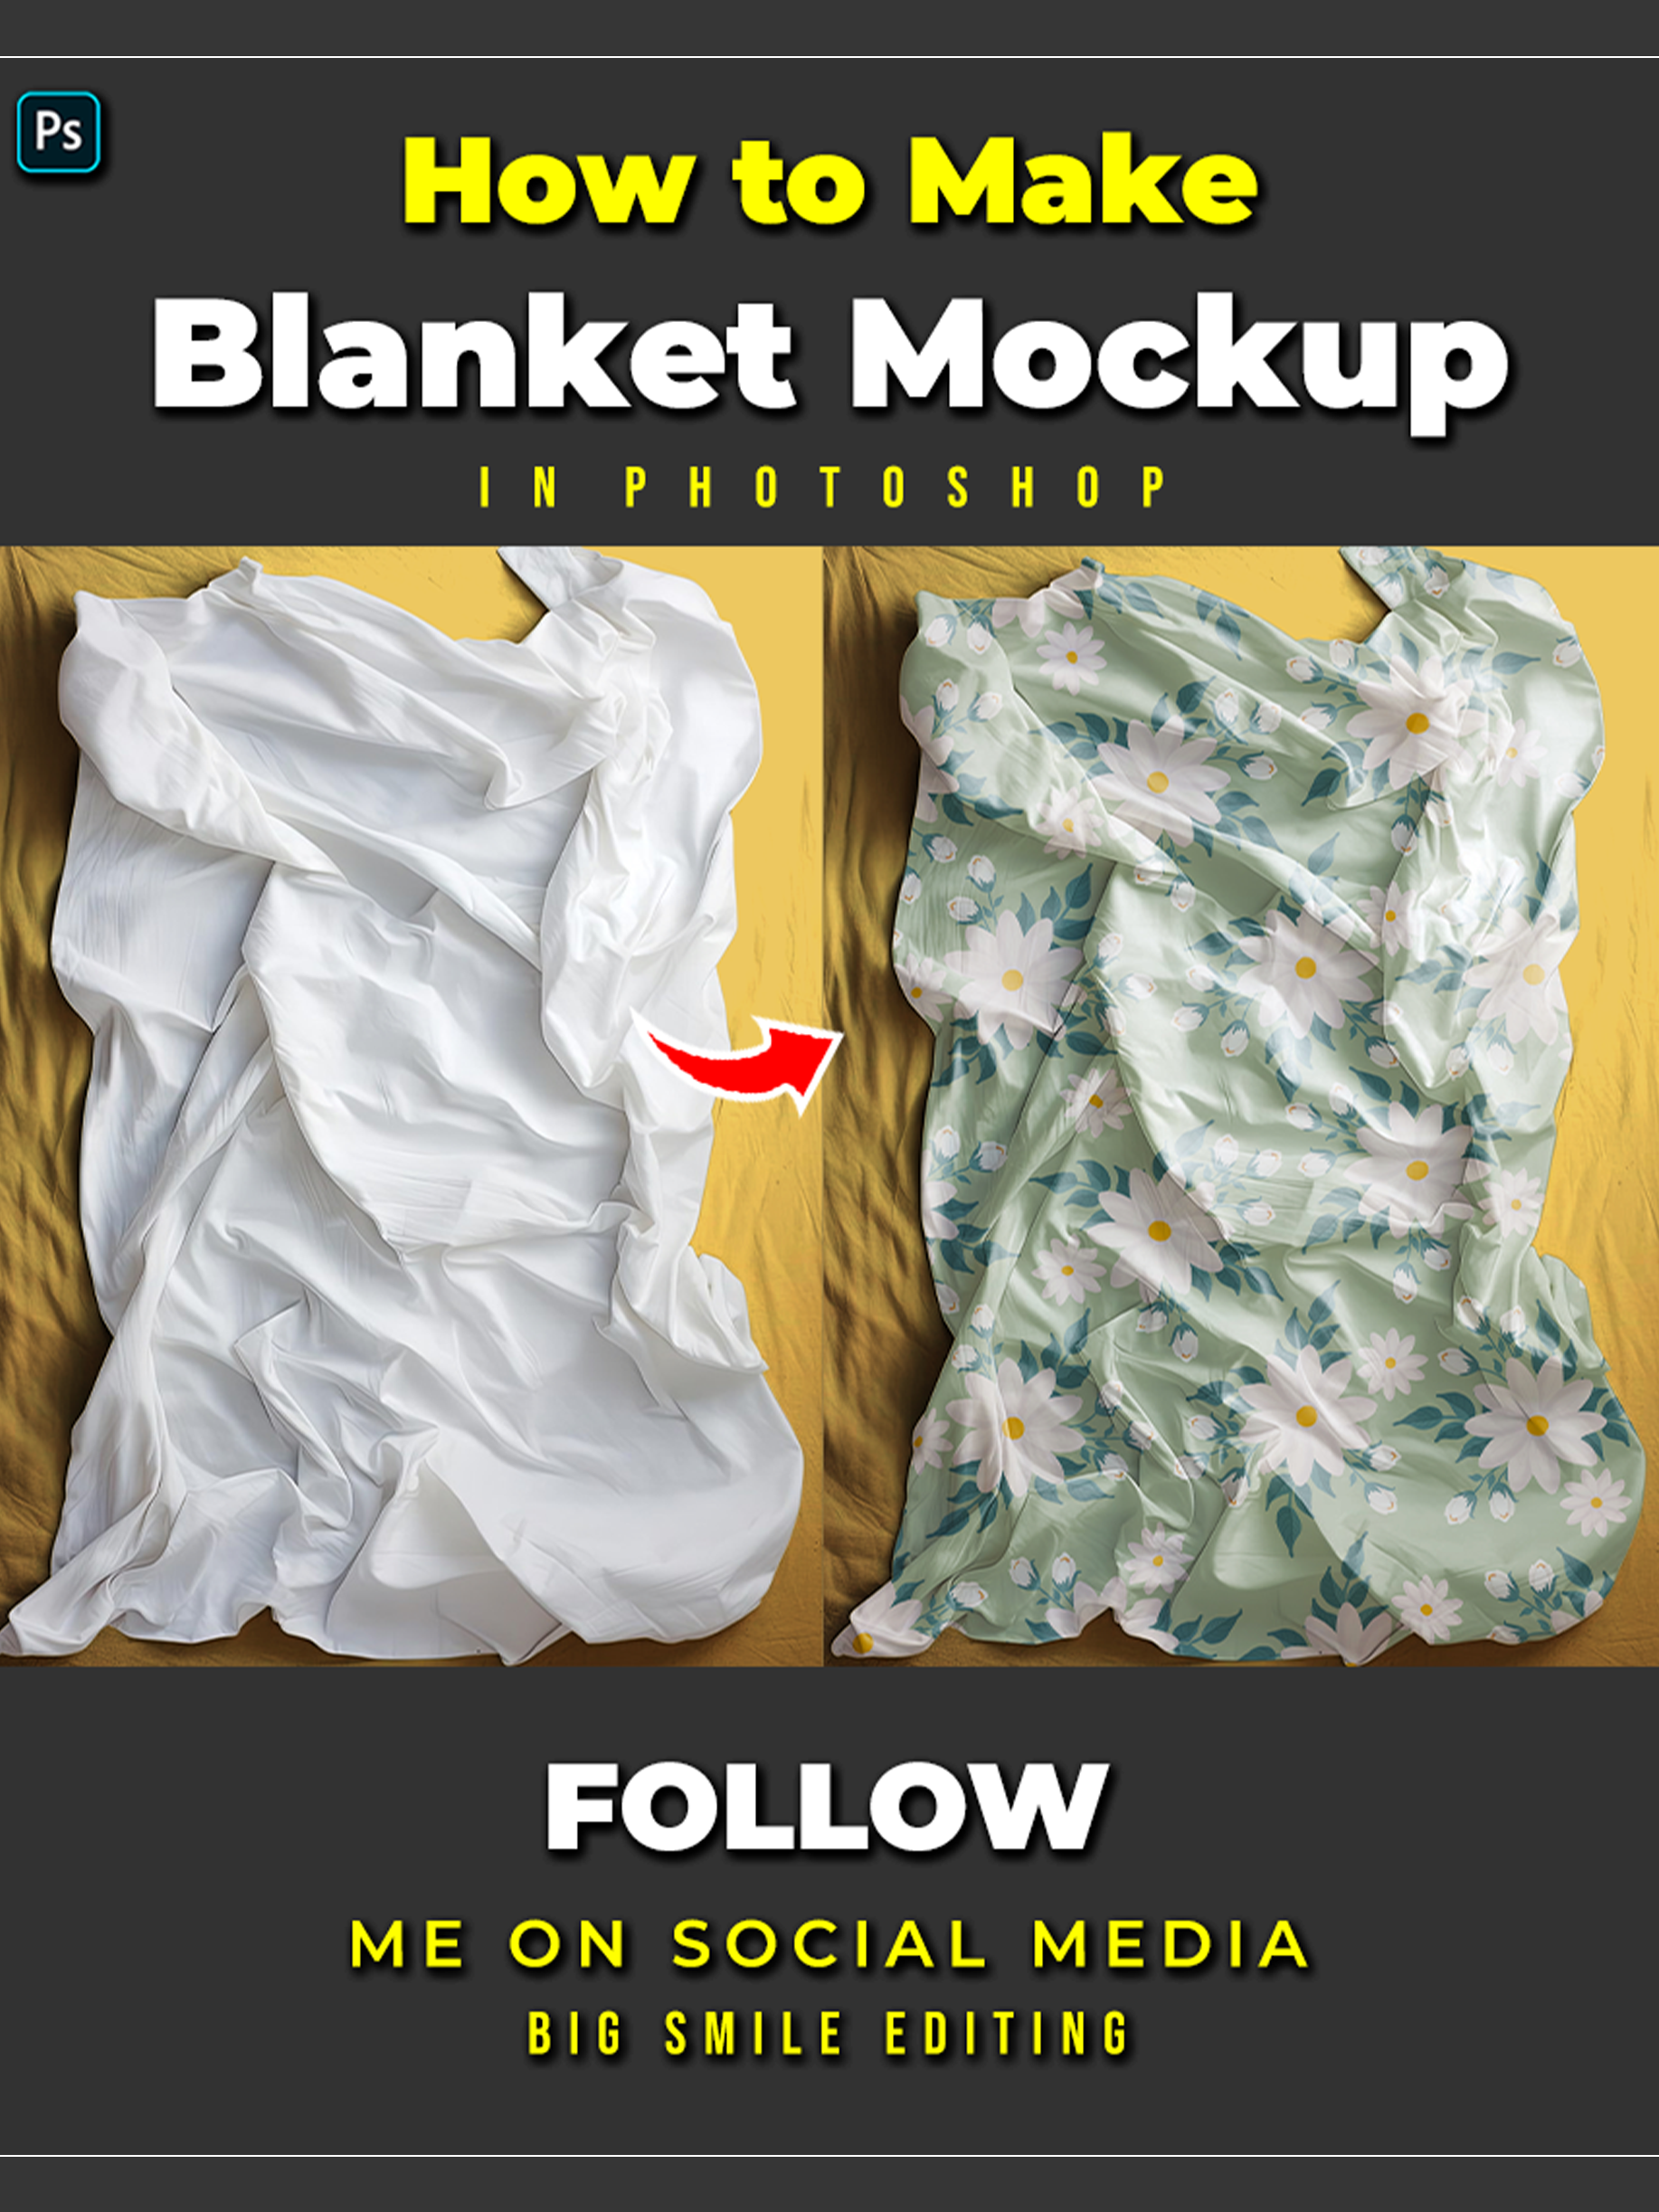 How to make crumpled blanket mockup in photoshop #photoshoptricks#tutorial#tutorials#designer#photoshop#photography#adobe#bigsmileediting